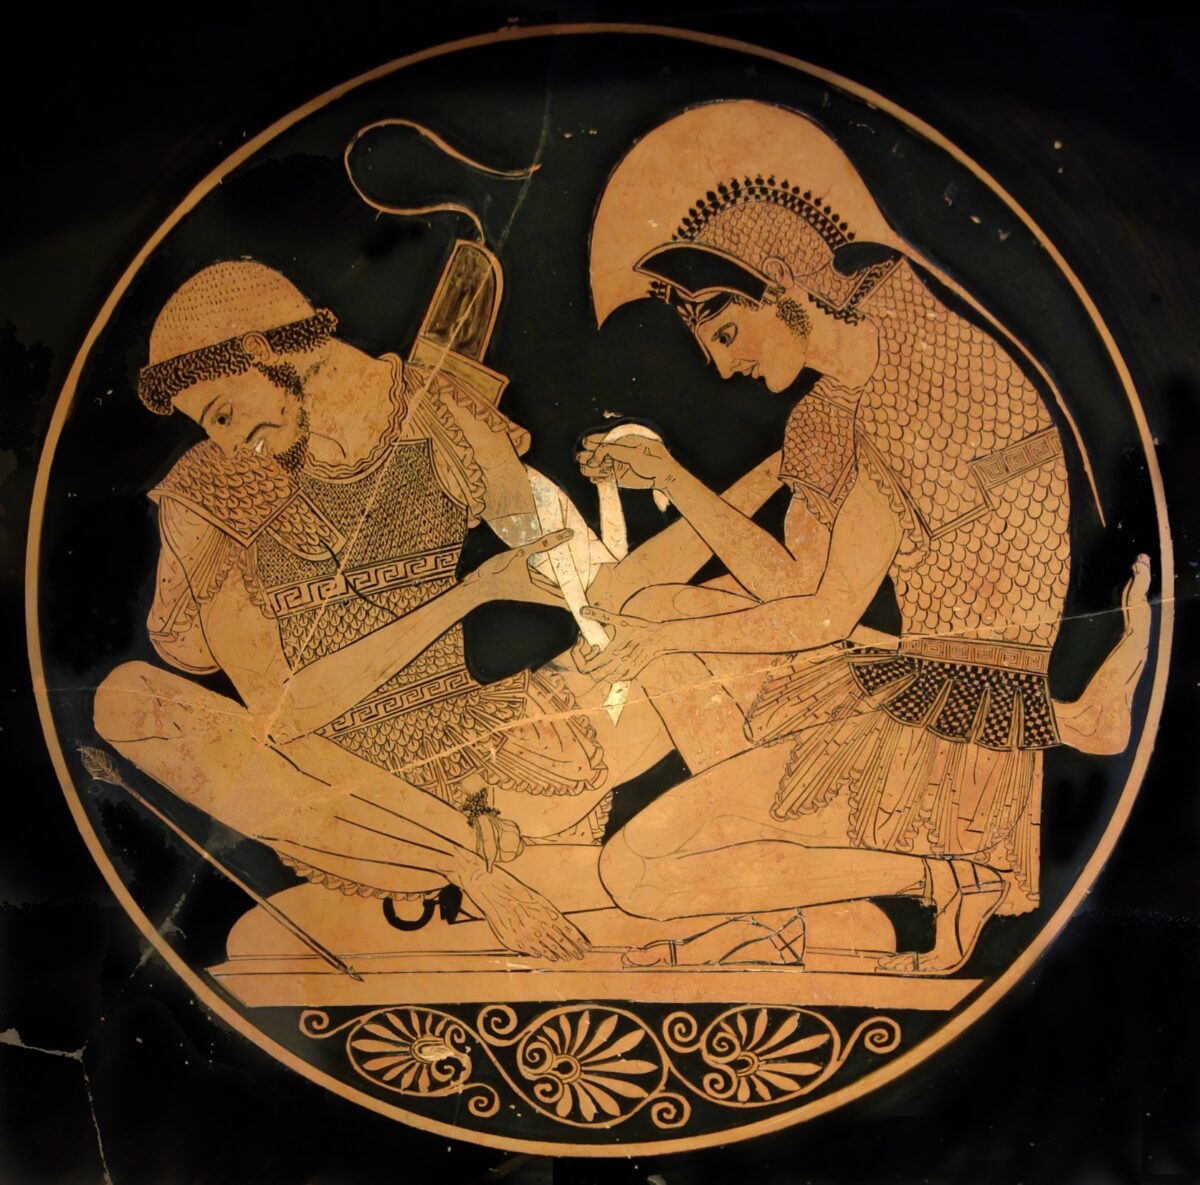 Achilleus versorgt den verwundeten Patroklos